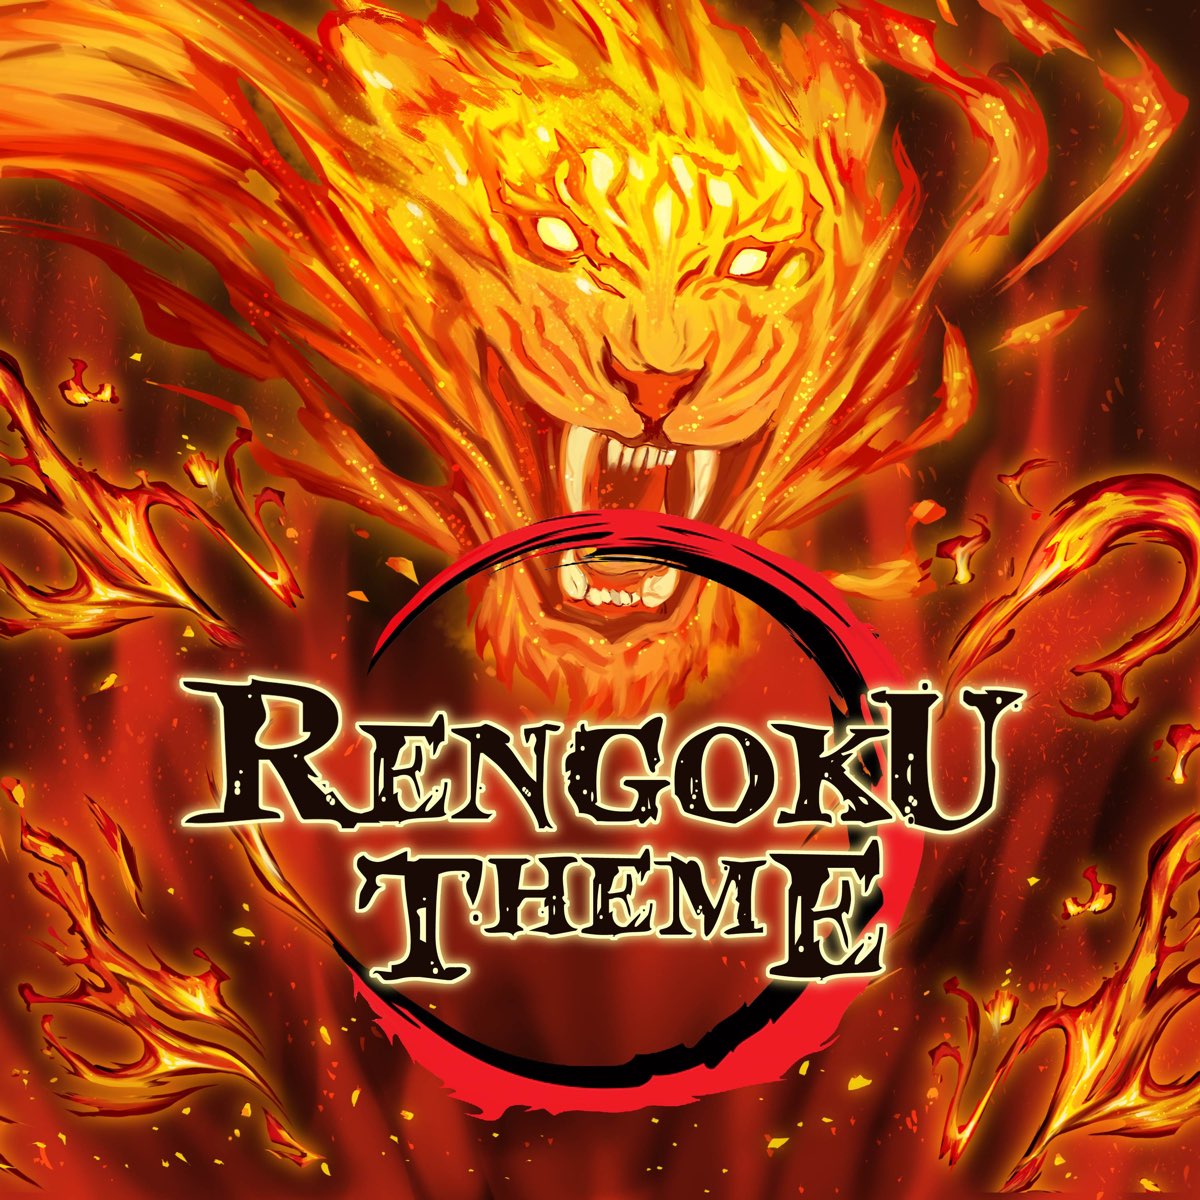 How can I get Rengoku V2?